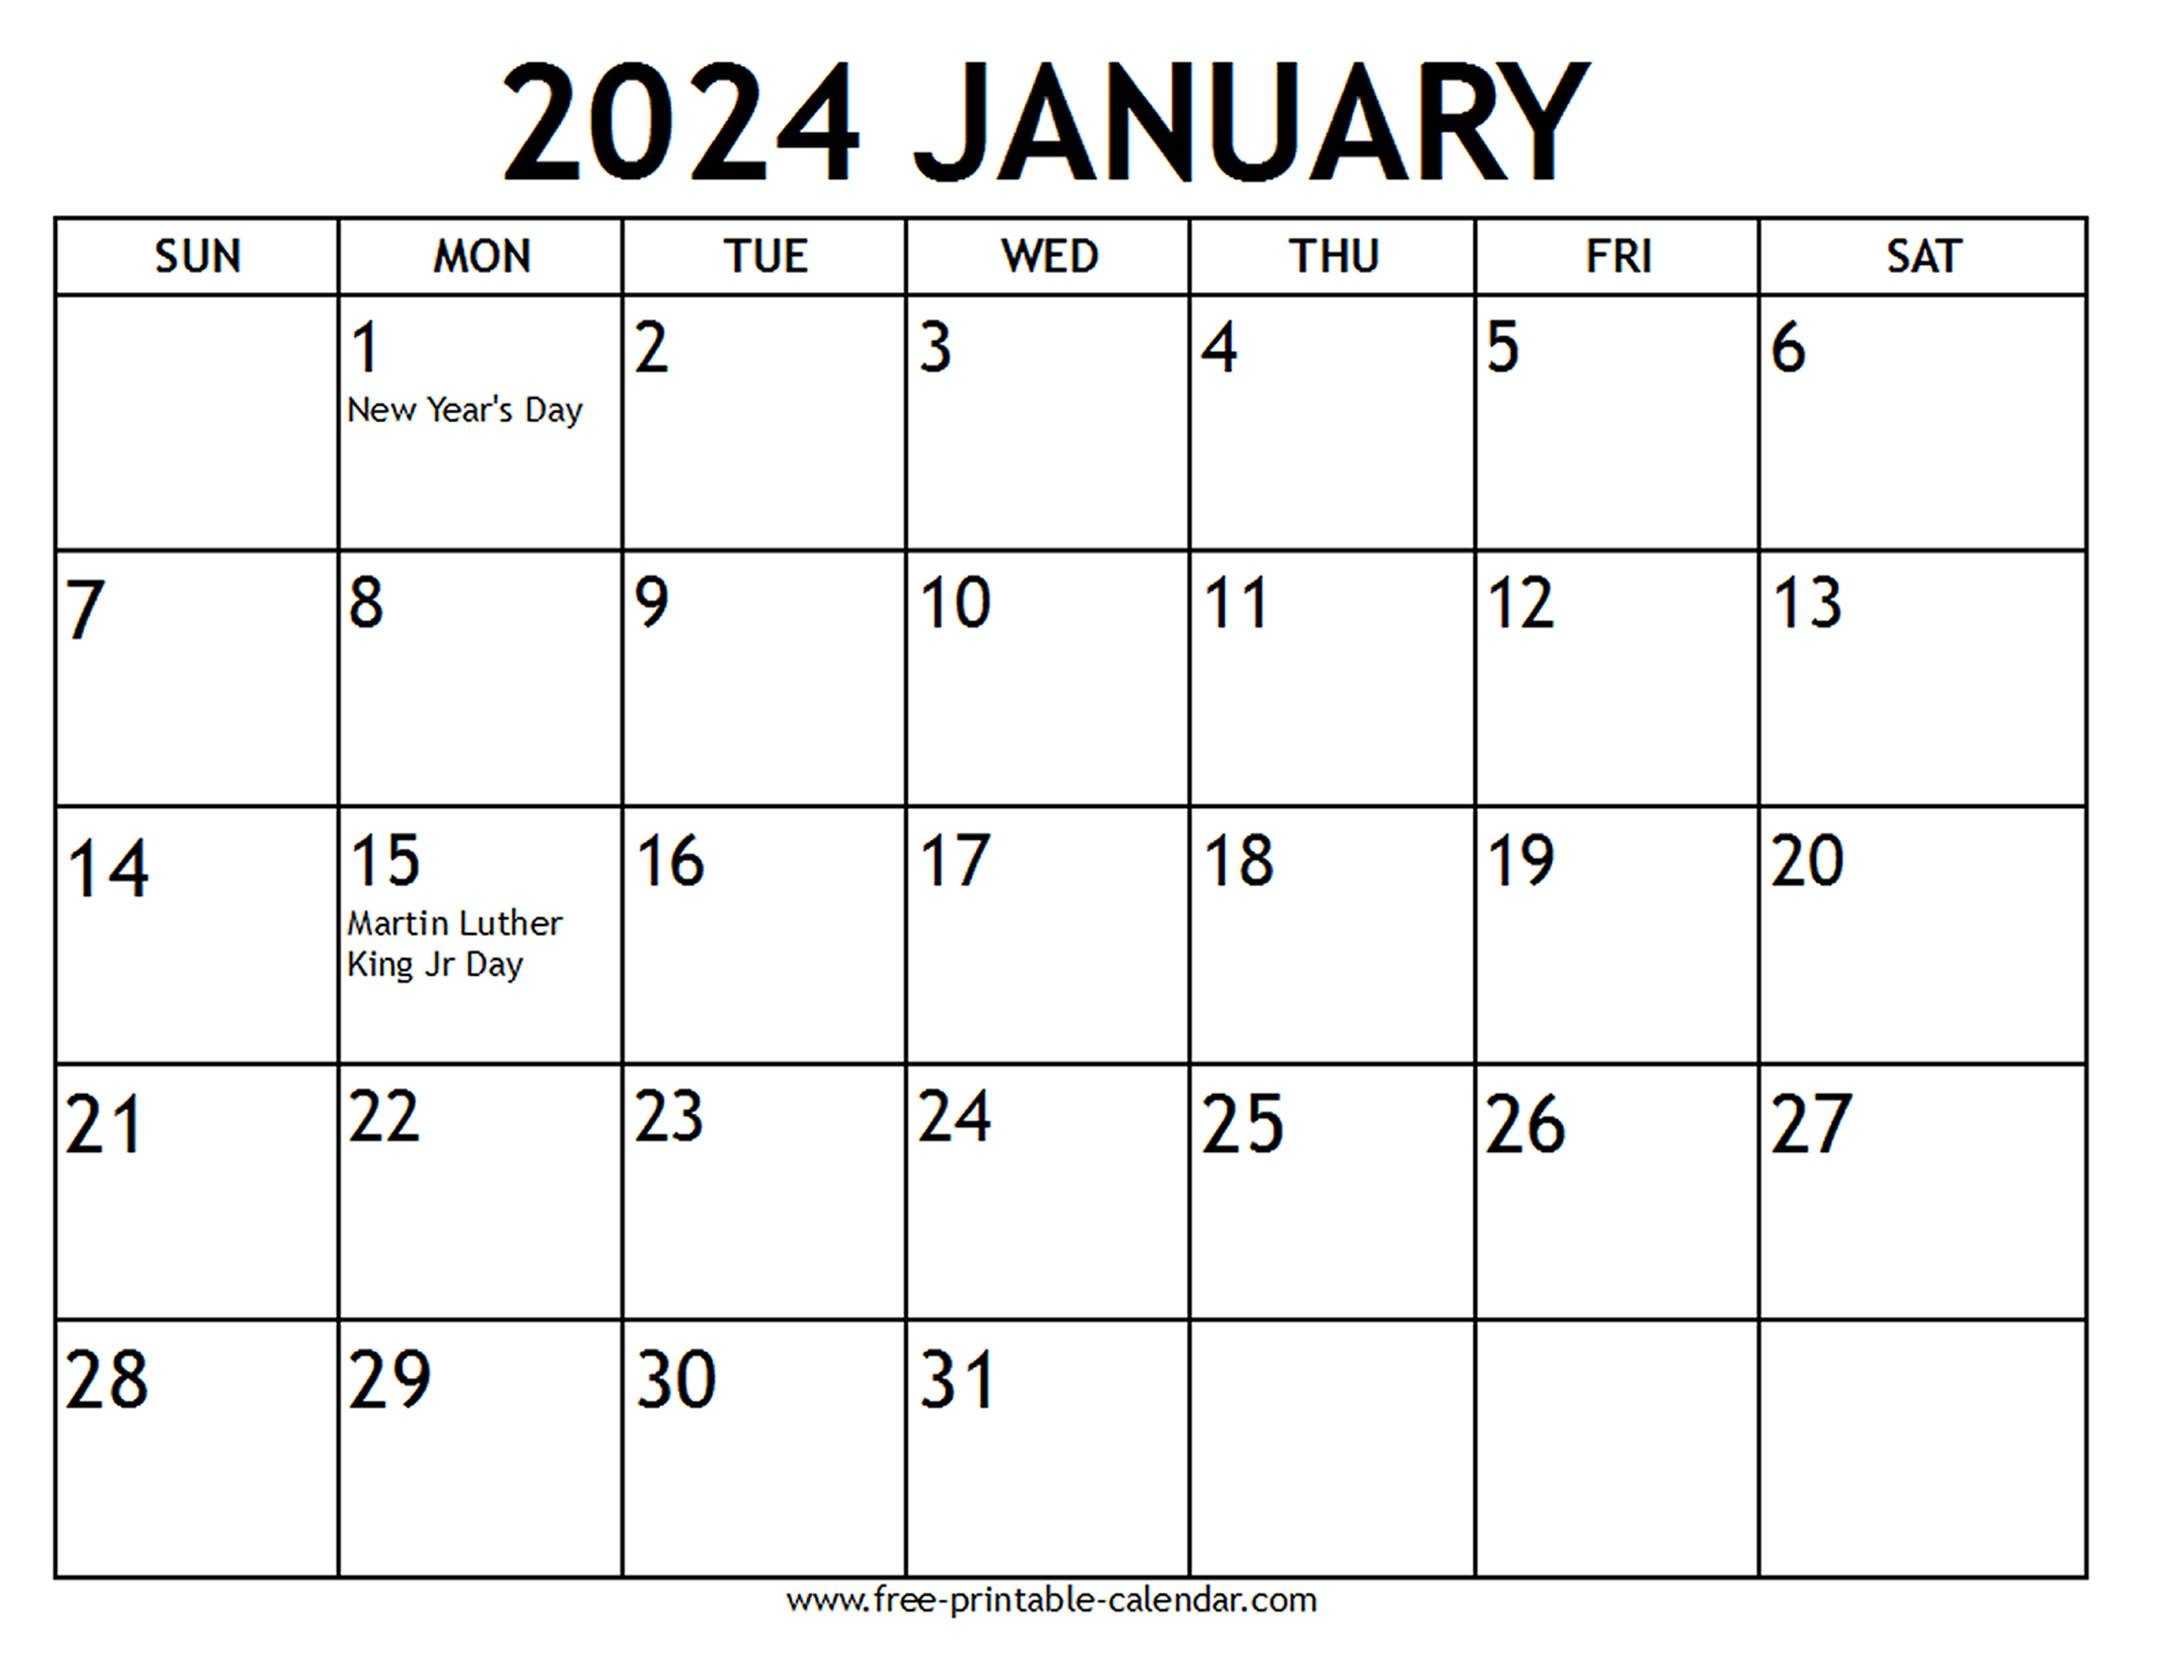 January 2024 Calendar Us Holidays - Free-Printable-Calendar regarding Free Printable Calendar 2024 By Month With Holidays